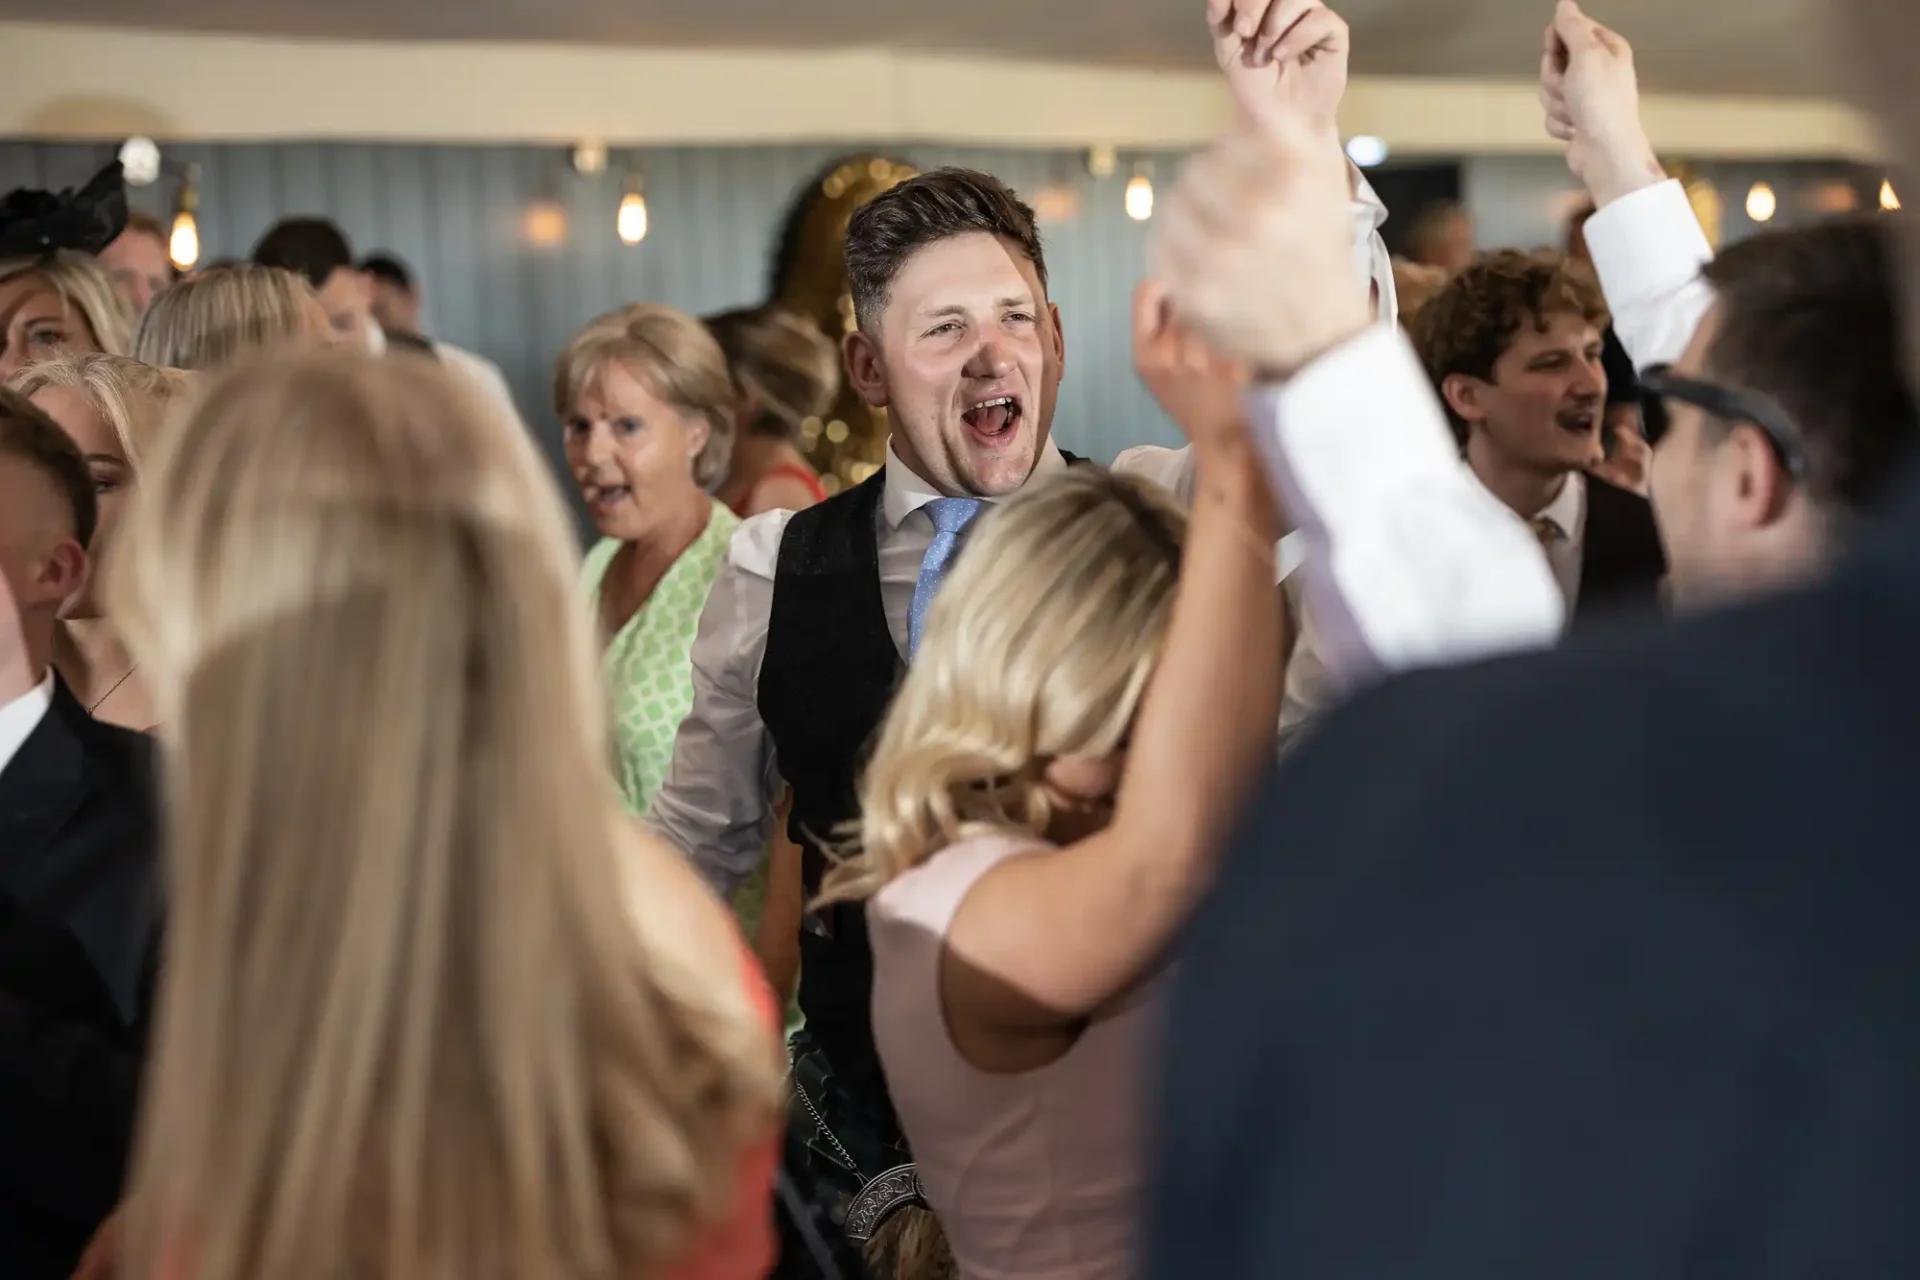 A joyful man raises his arm among a crowd of dancing people at an indoor celebration.